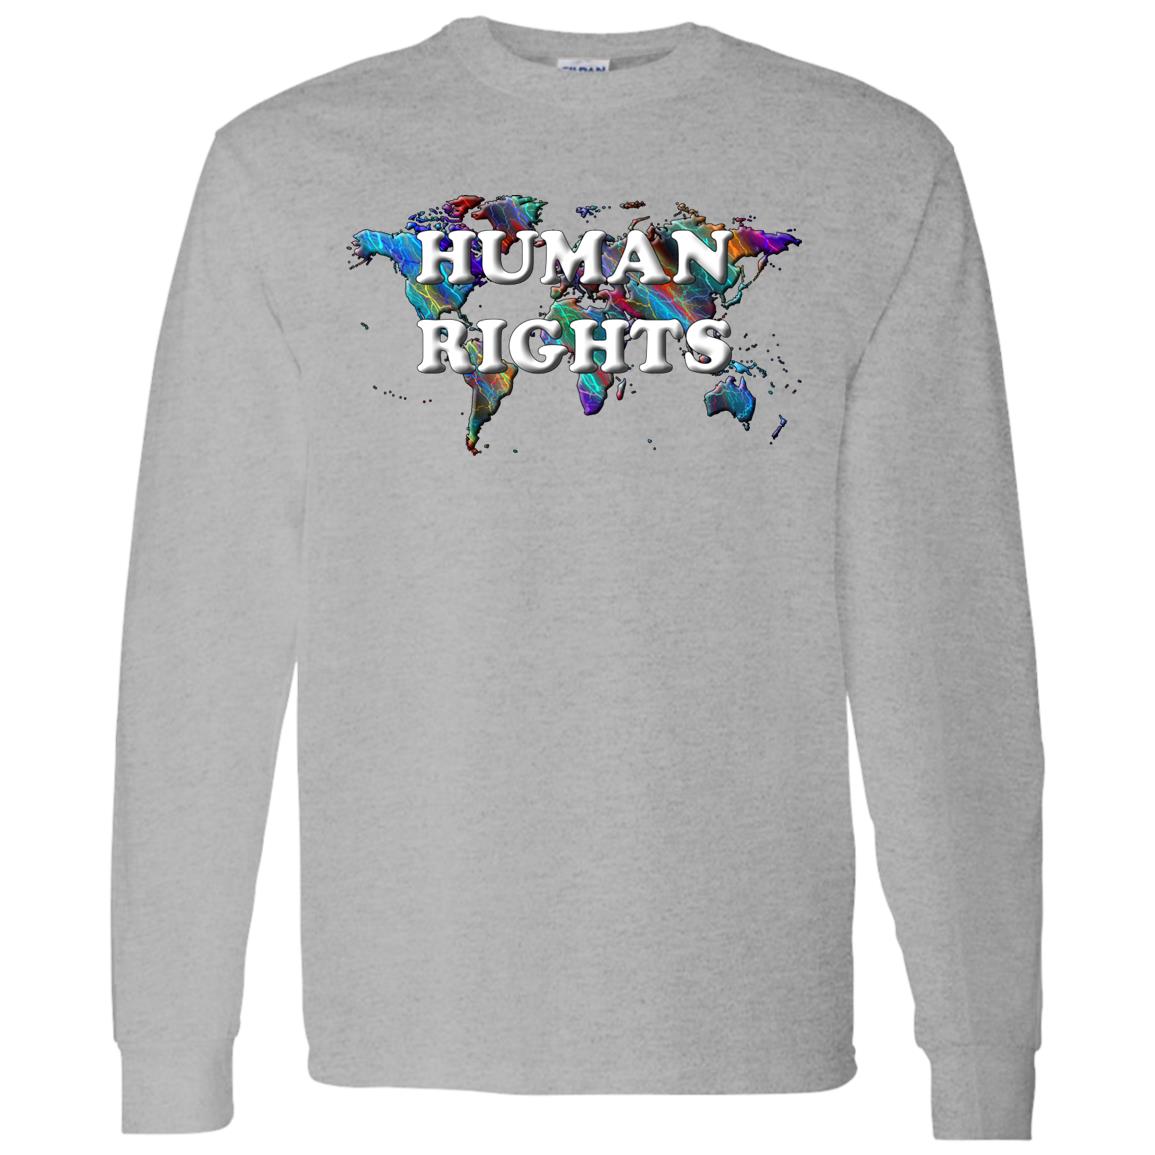 Human Rights Long Sleeve T-Shirt